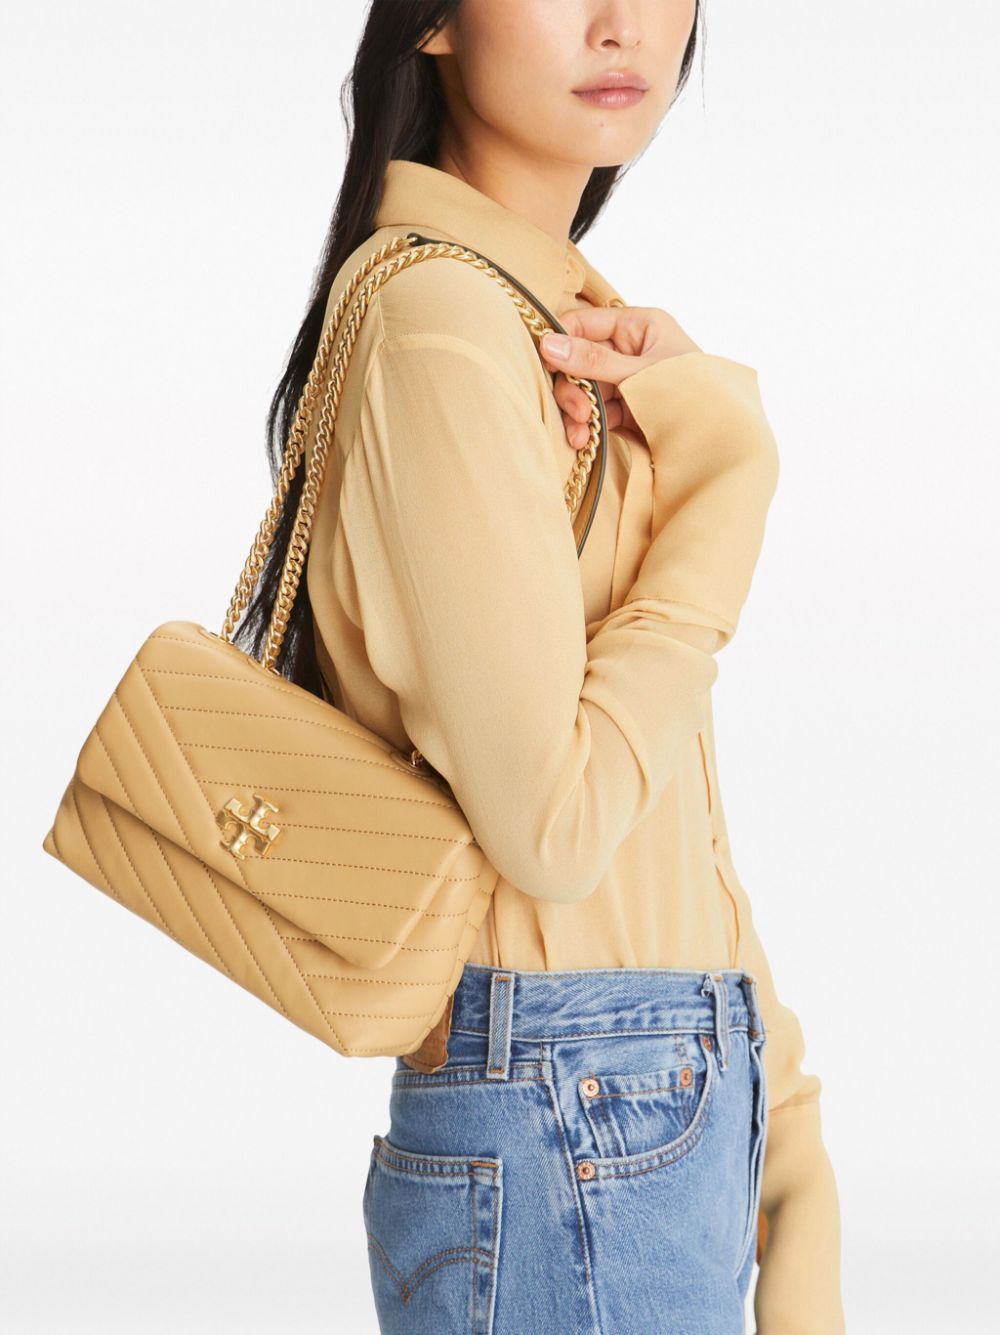 Small Kira chevron leather shoulder bag<BR/><BR/><BR/>